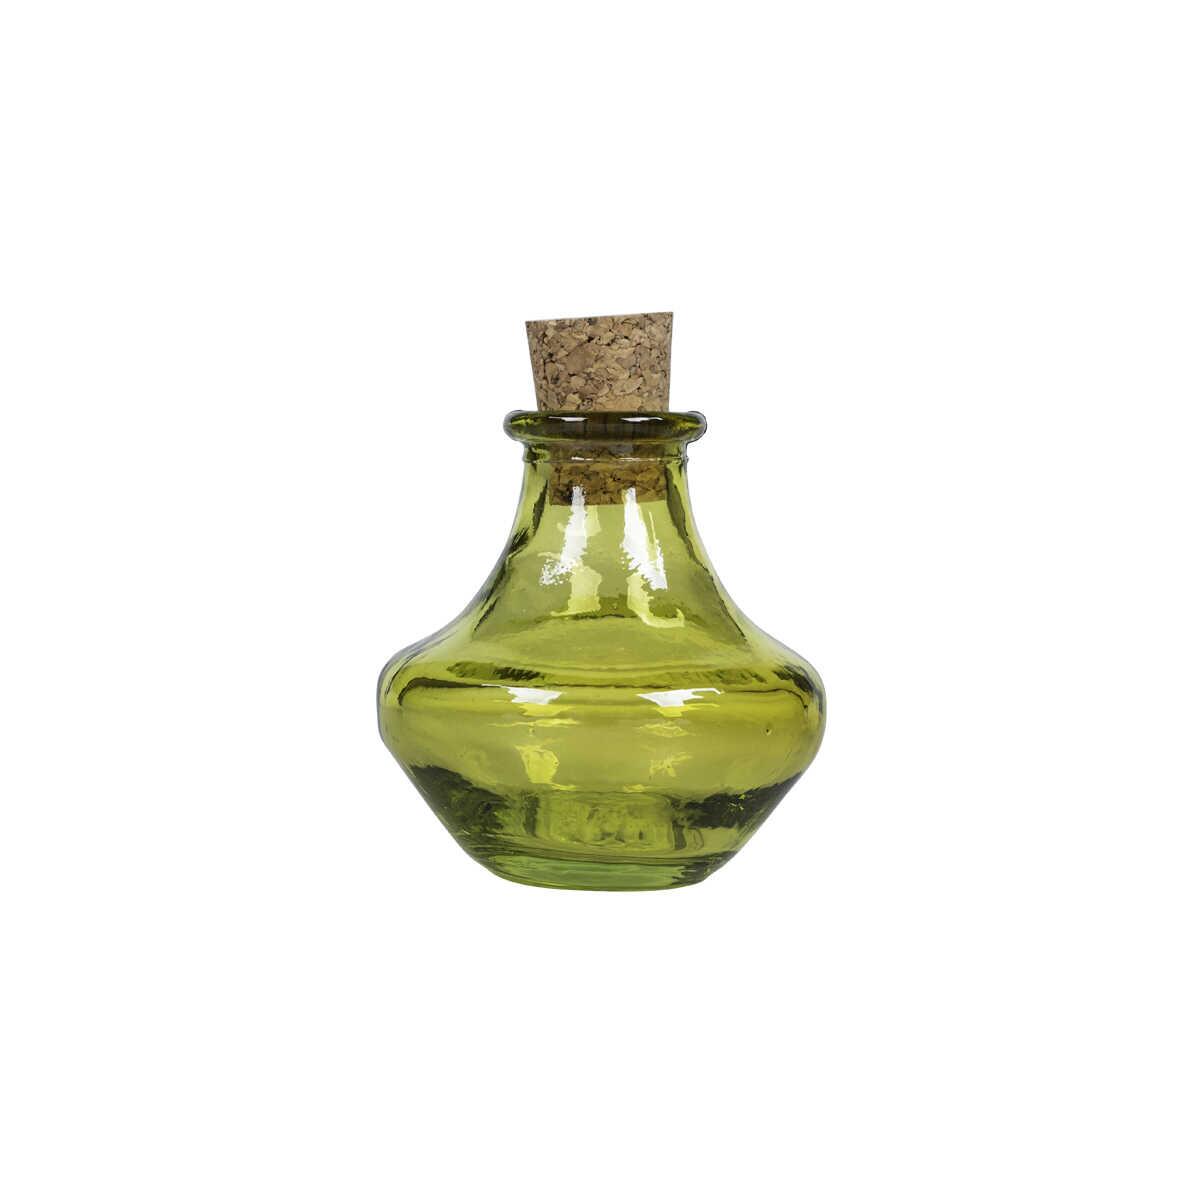 Sanmiguel Lis Oriental Oil Bottle 100 ml 2